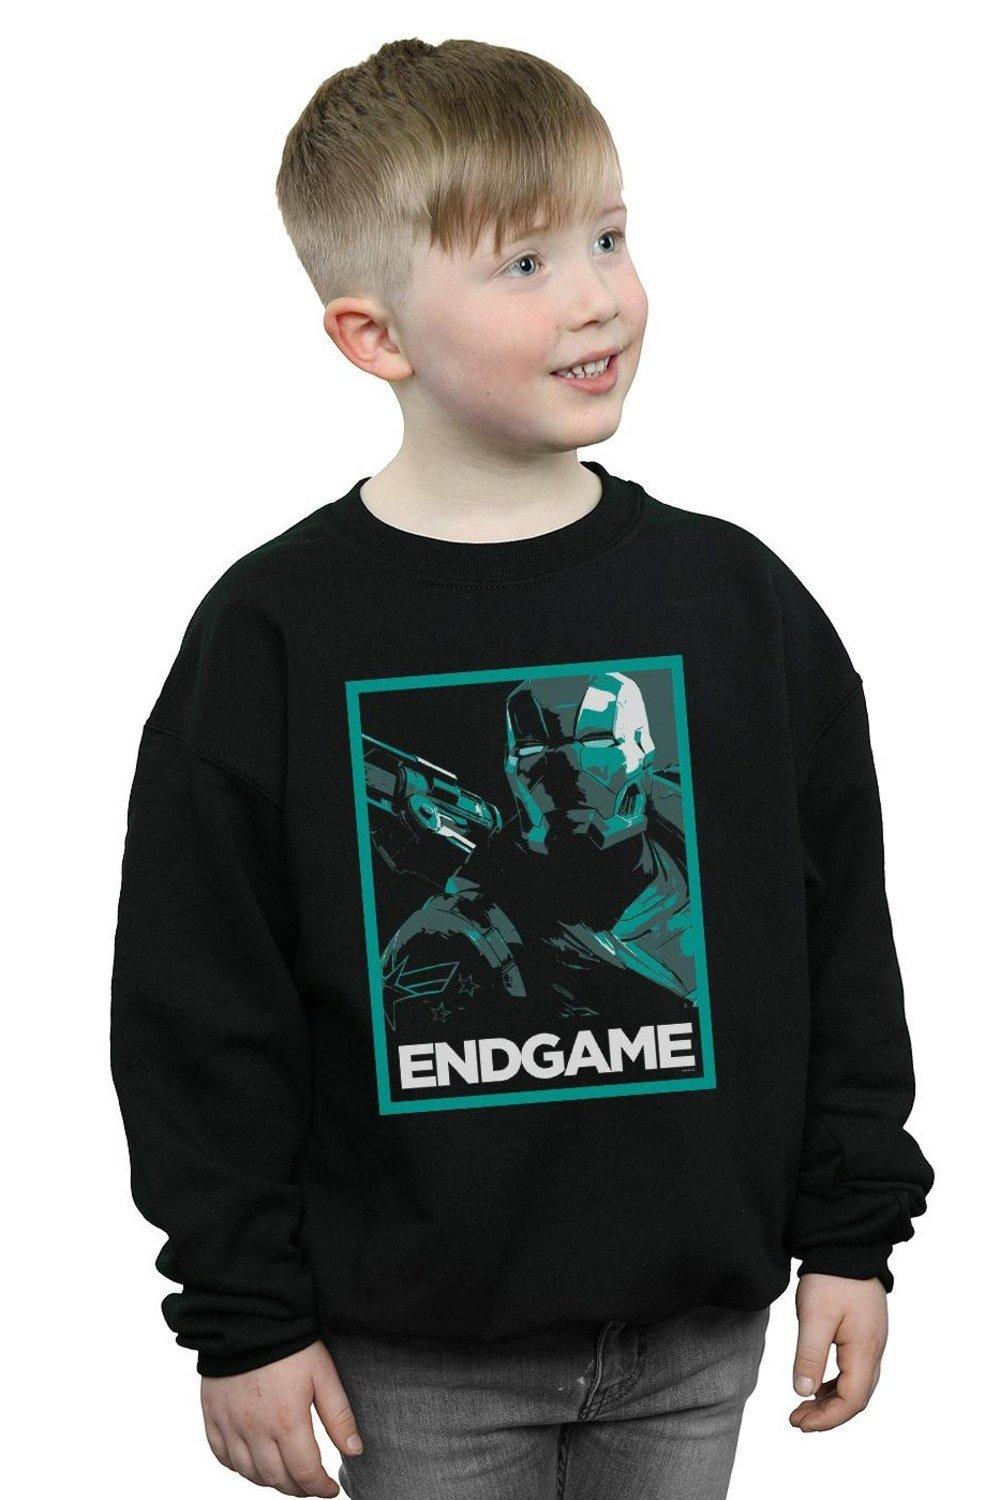 Avengers Endgame War Machine Poster Sweatshirt